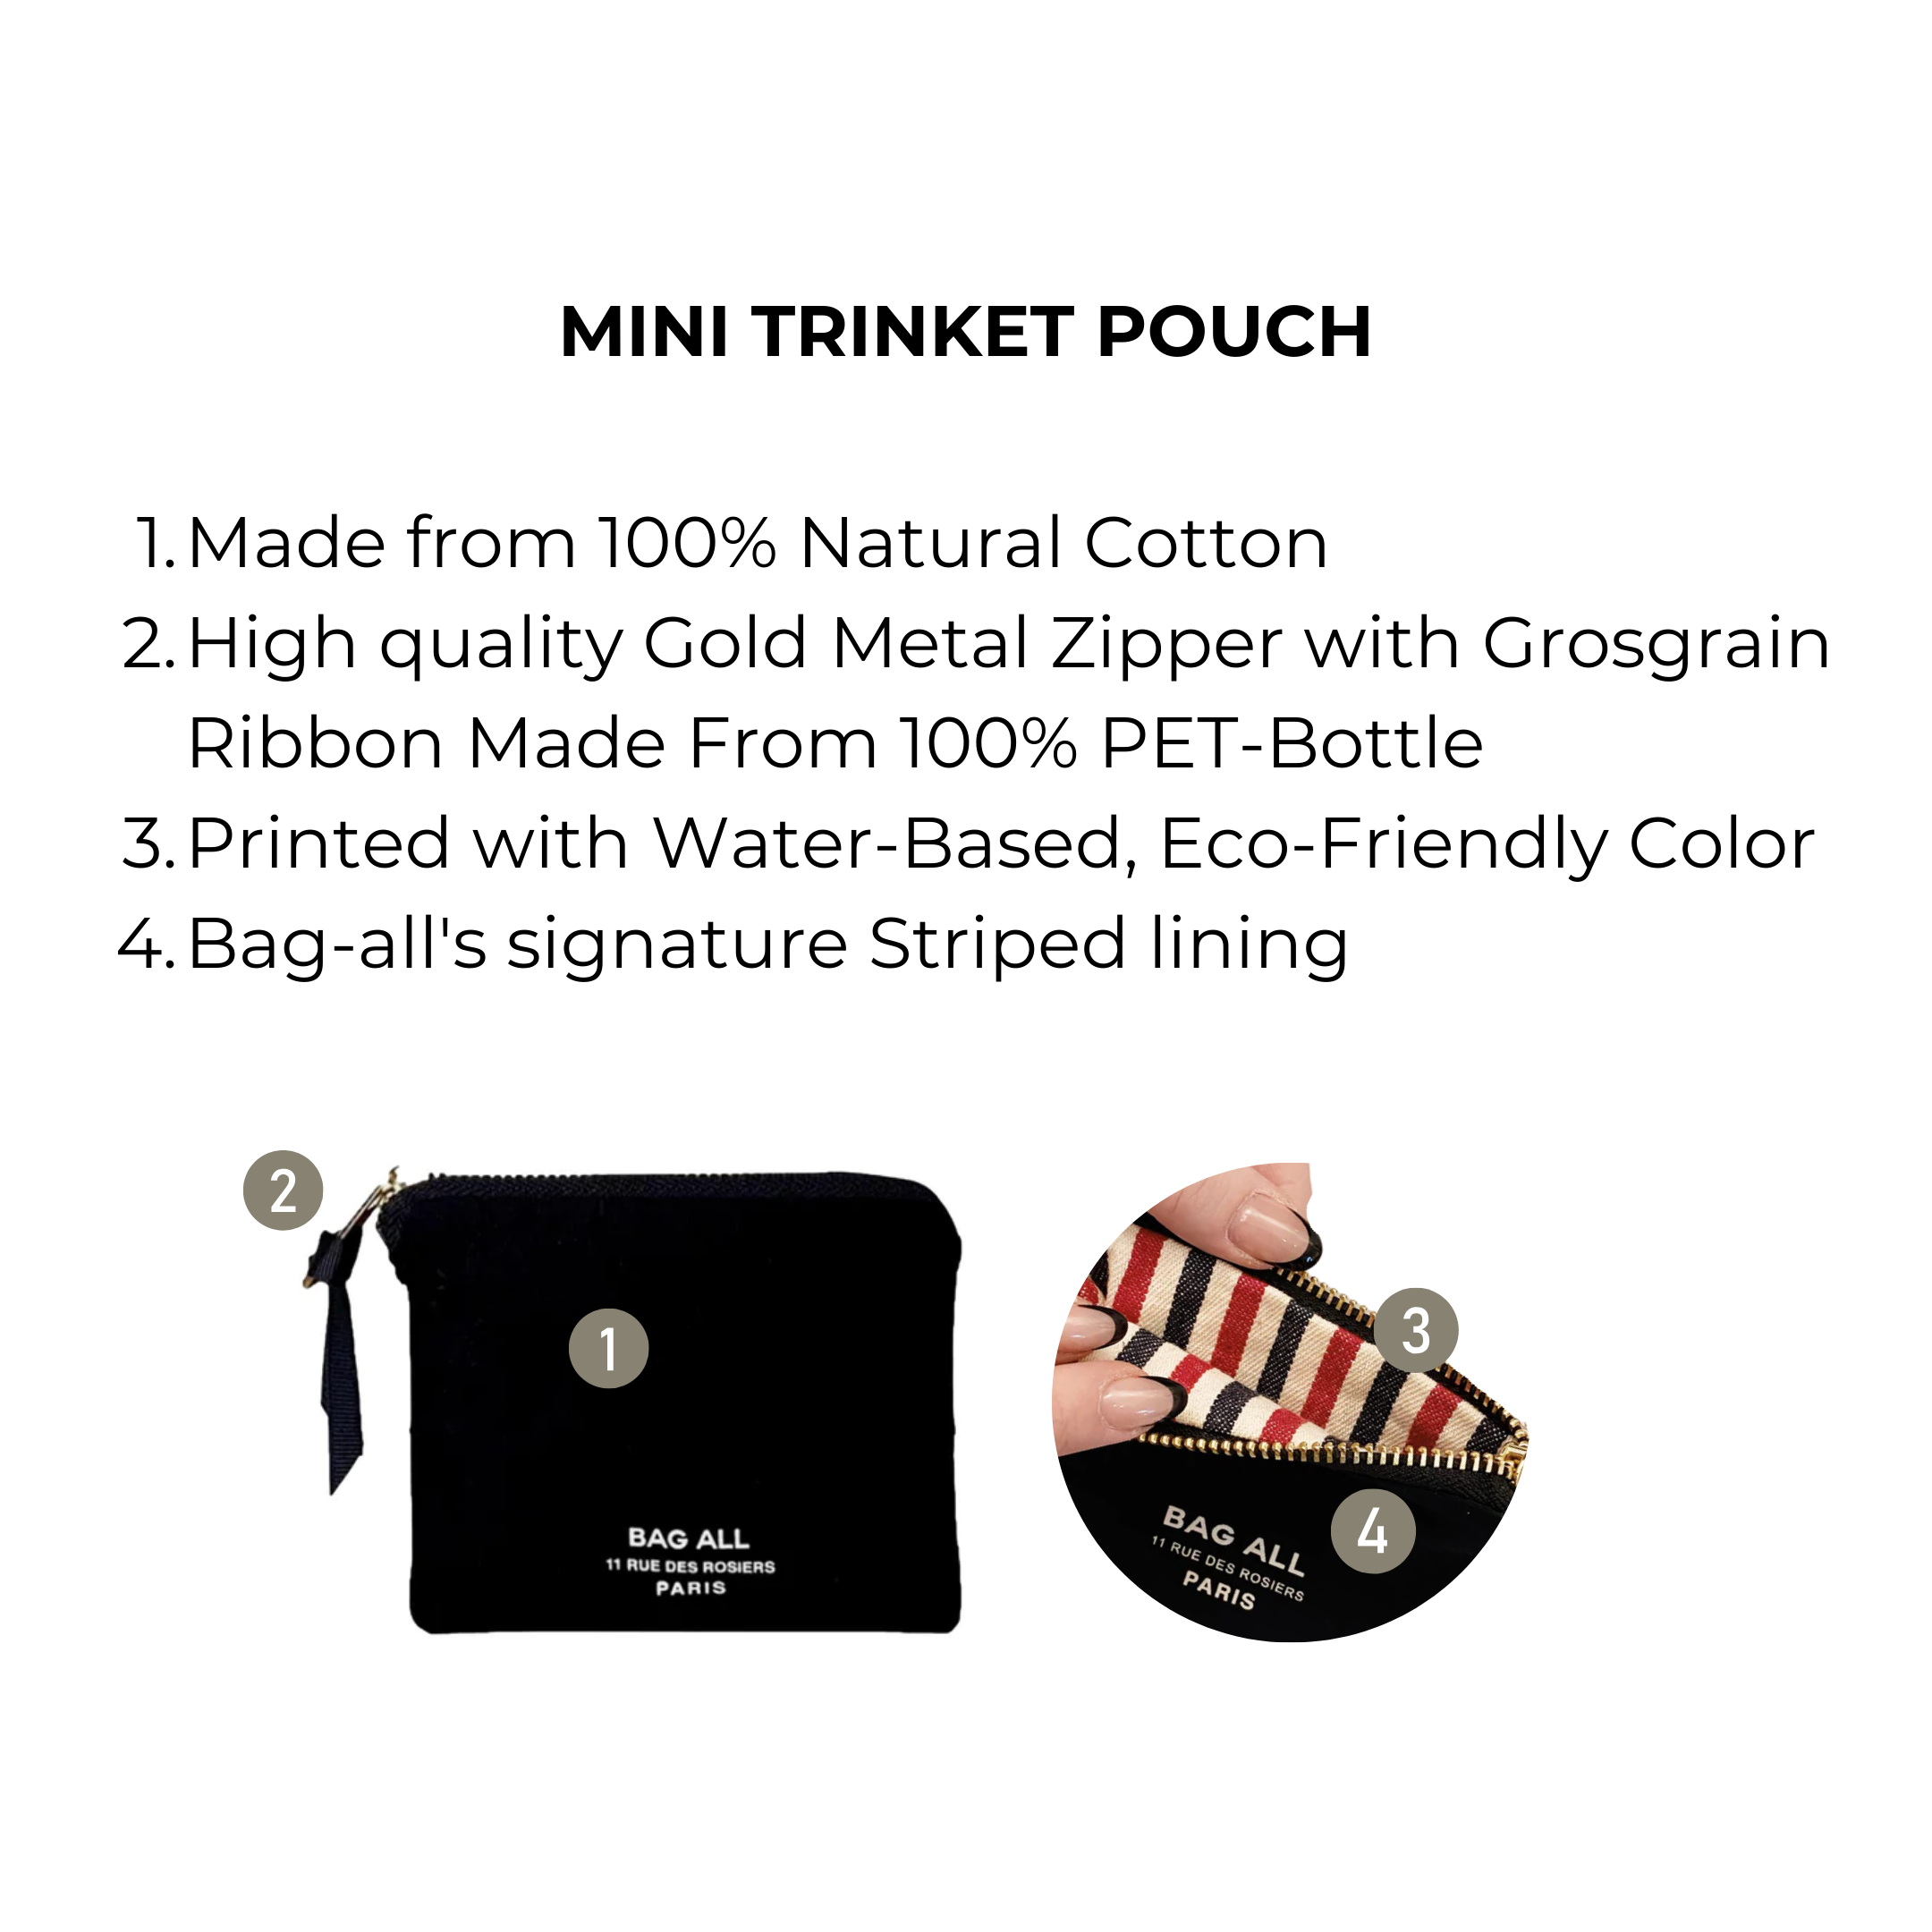 Mini Trinket Pouch, Black | Bag-all